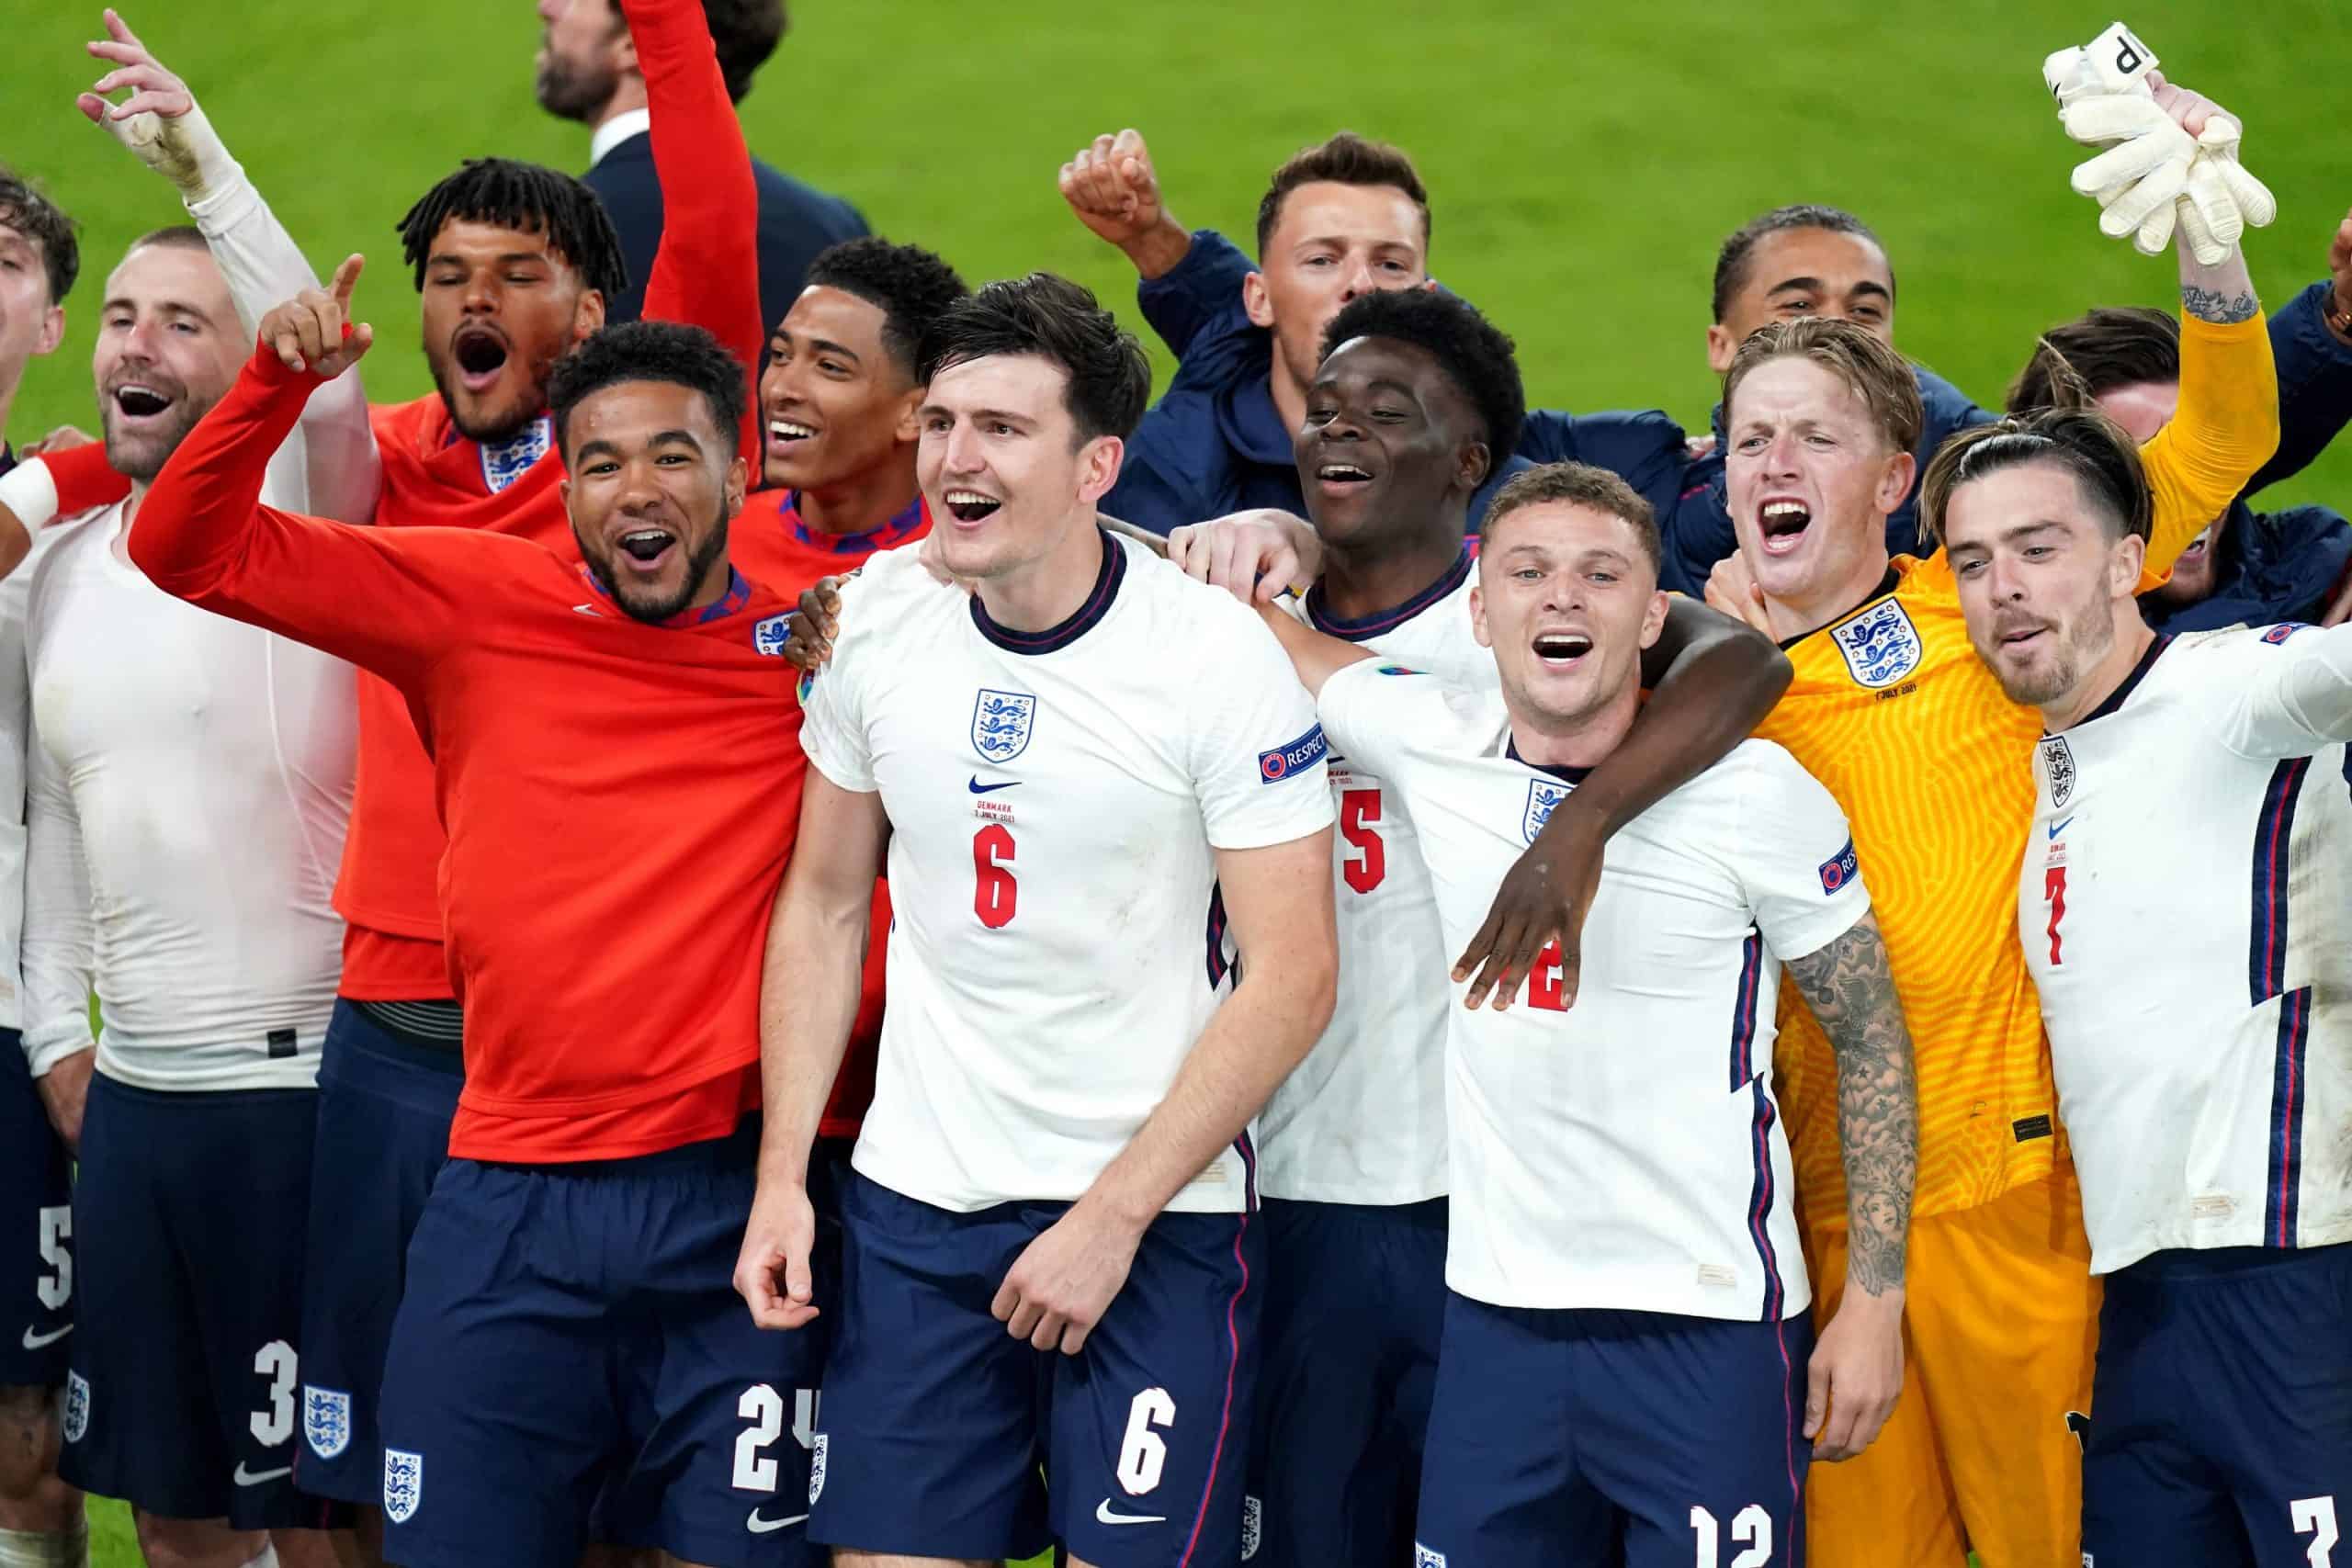 England team to donate Euros prize money millions to NHS